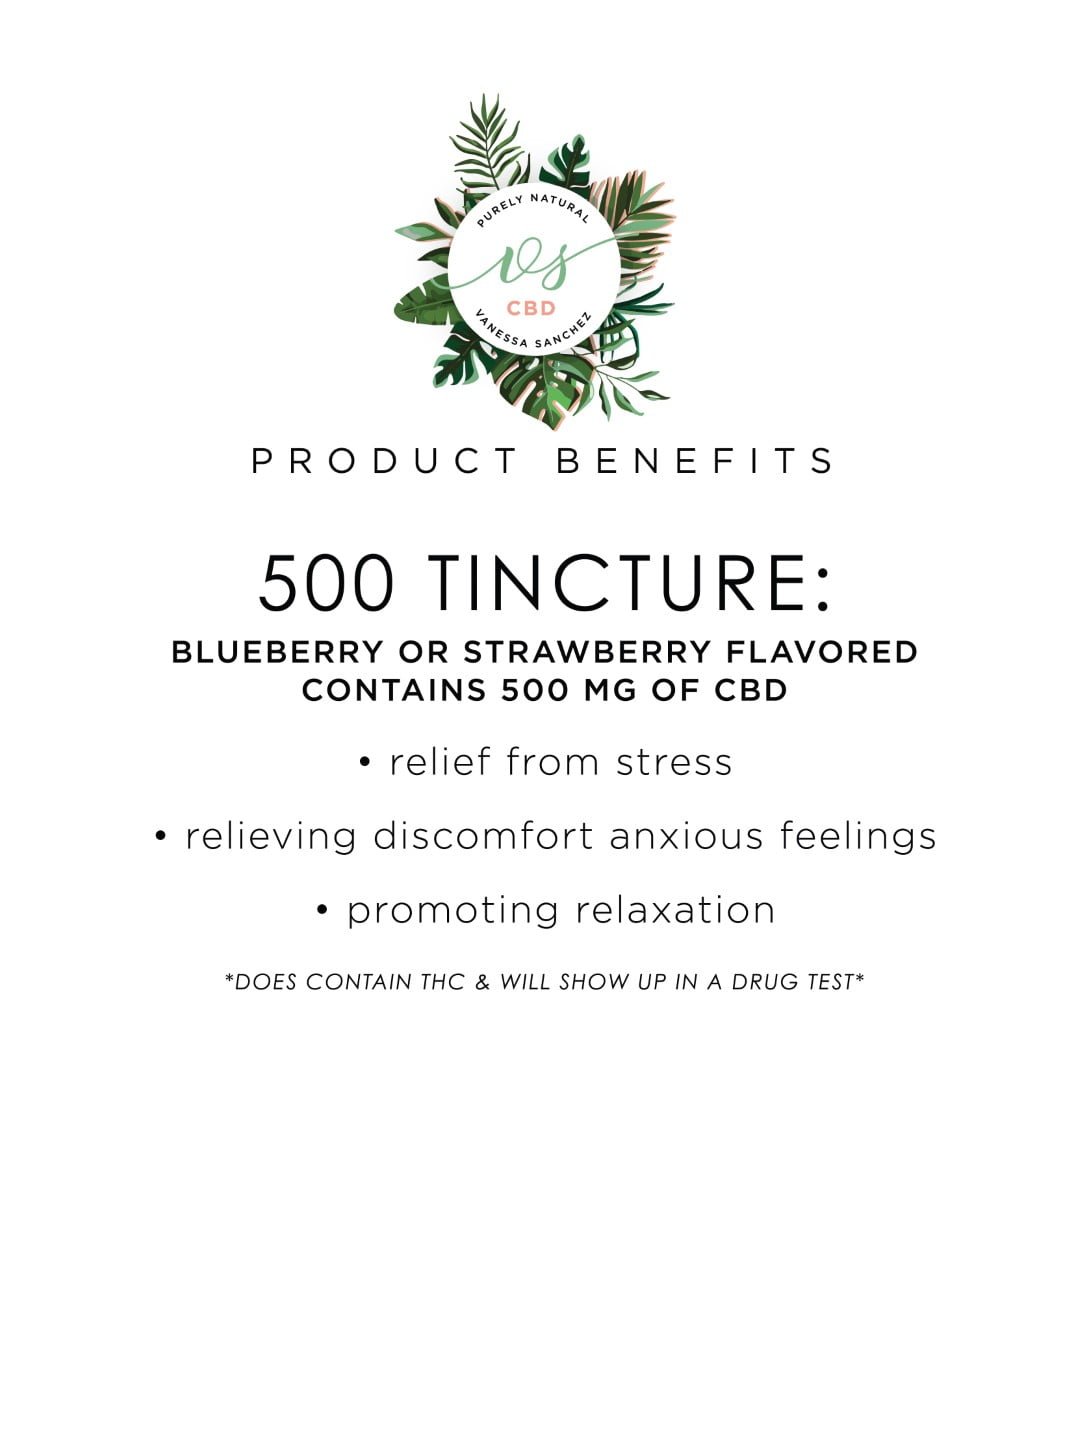 500 tincture benefits-01 (Large)